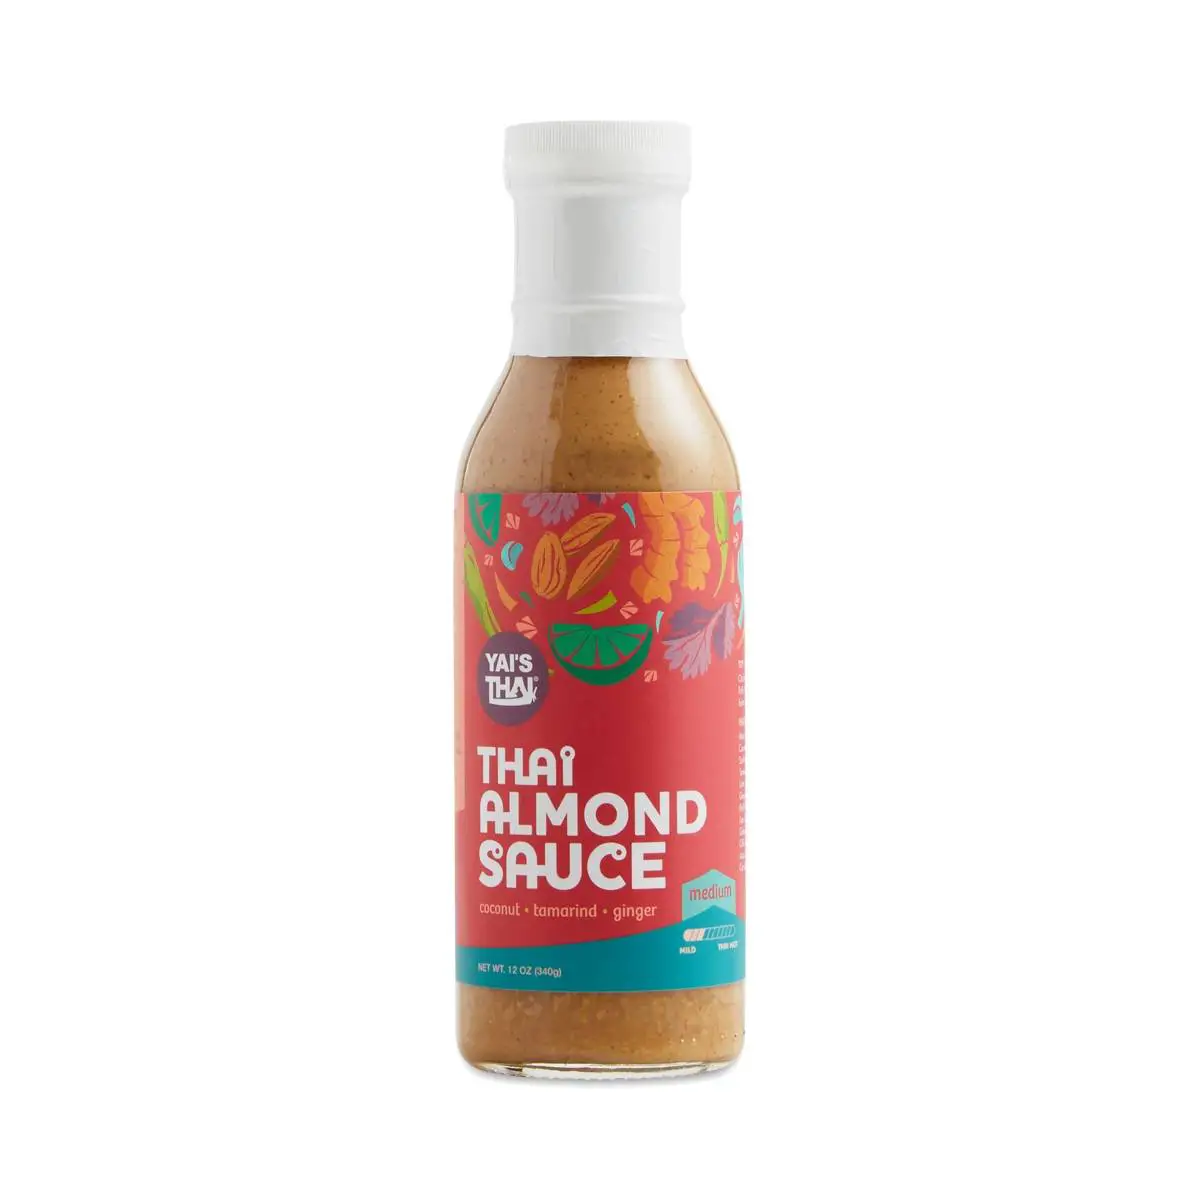 Almond Sauce by Yais Thai